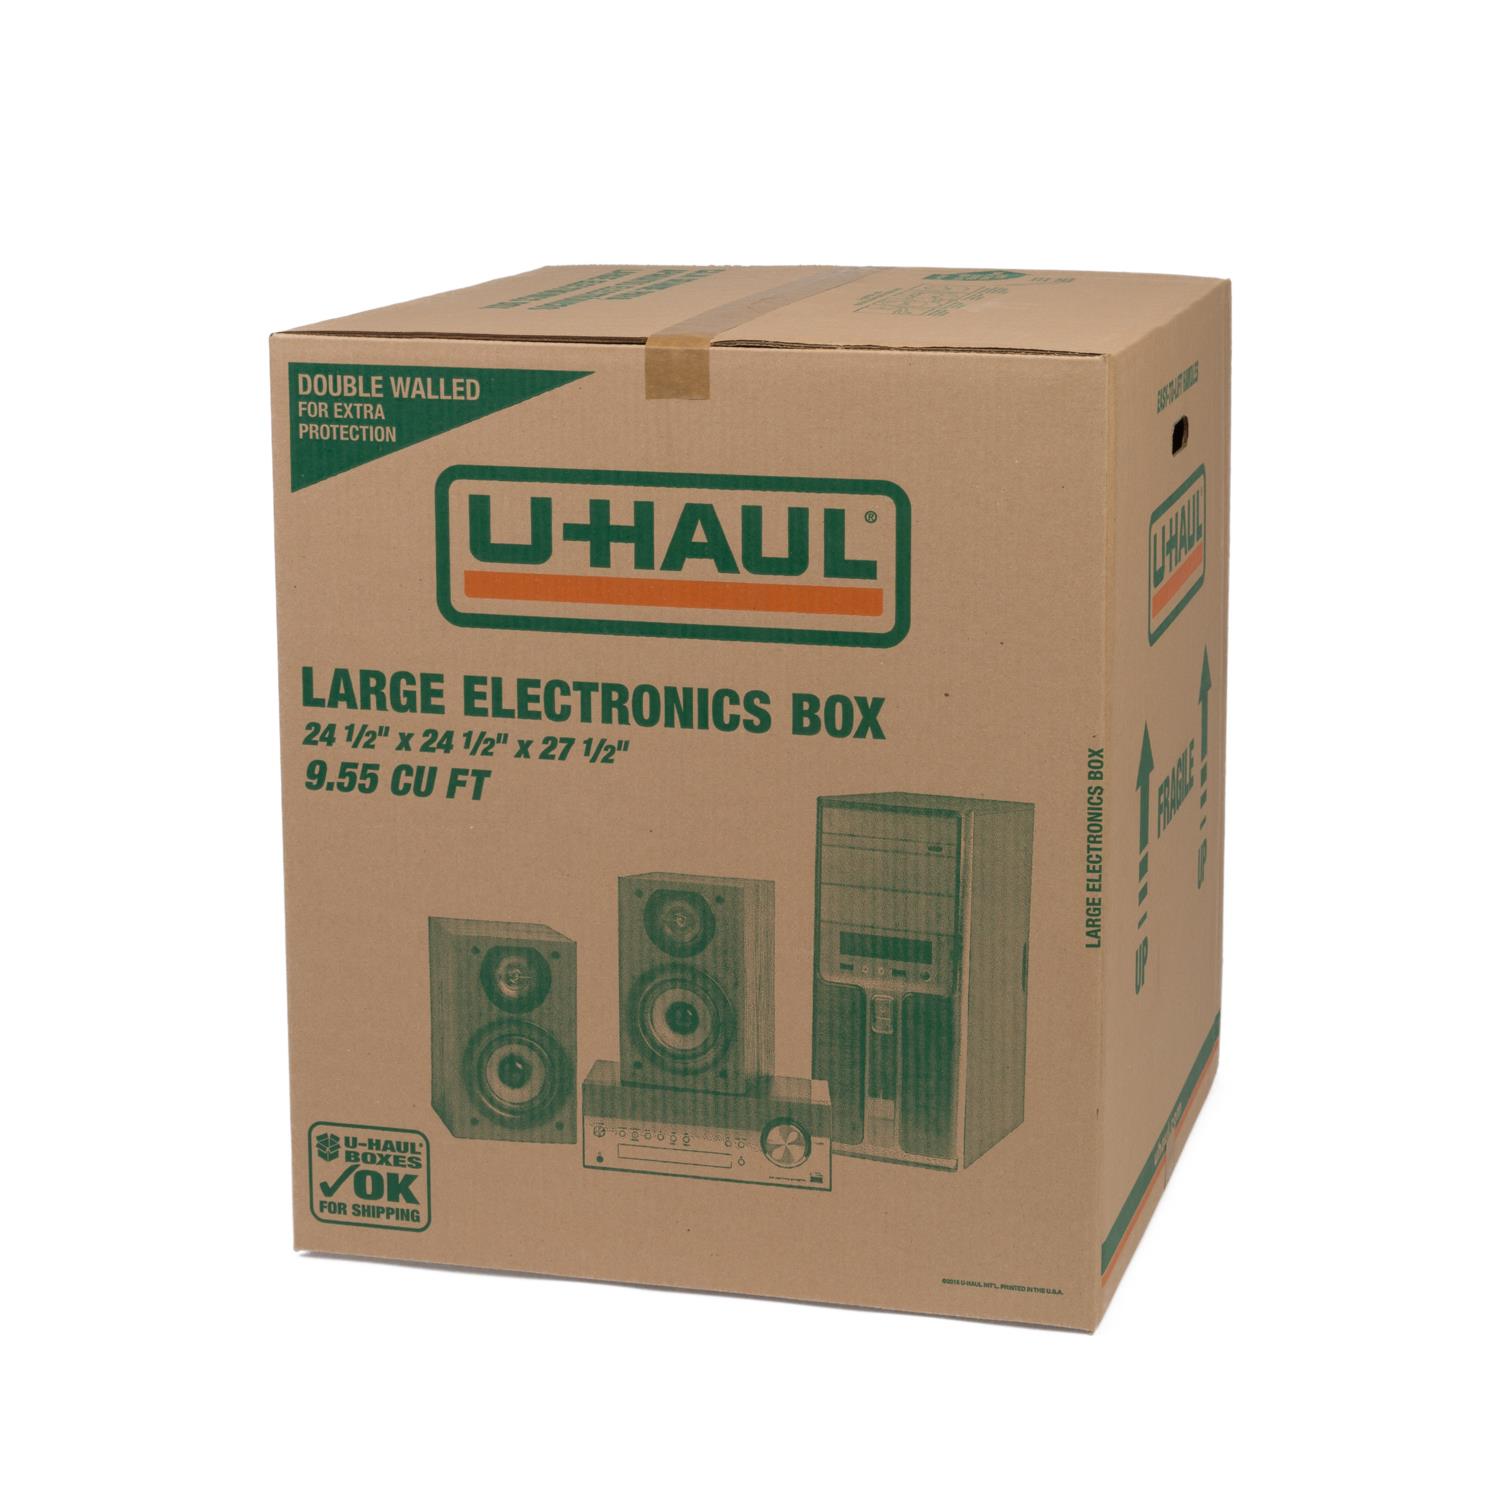 U-Haul: Large Electronics Box